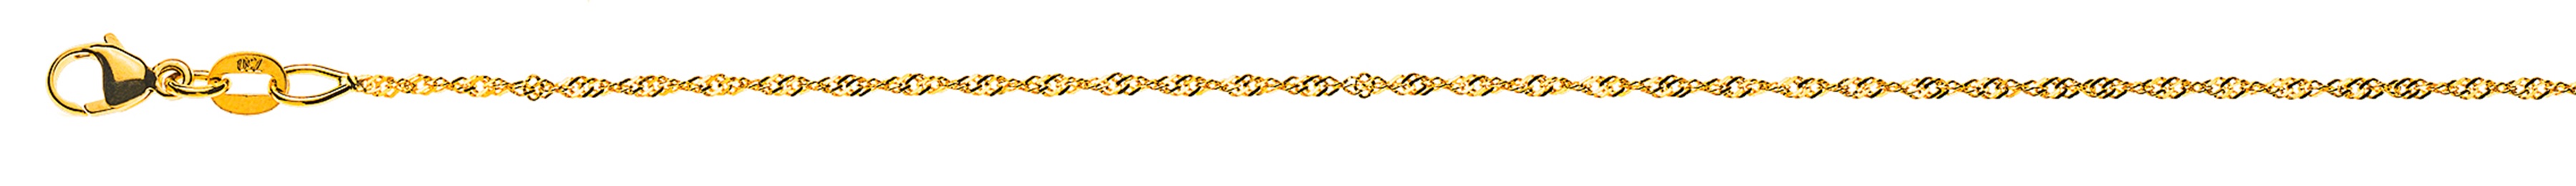 AURONOS Style Necklace Yellow Gold 9K Singapore Chain 40cm 1.2mm